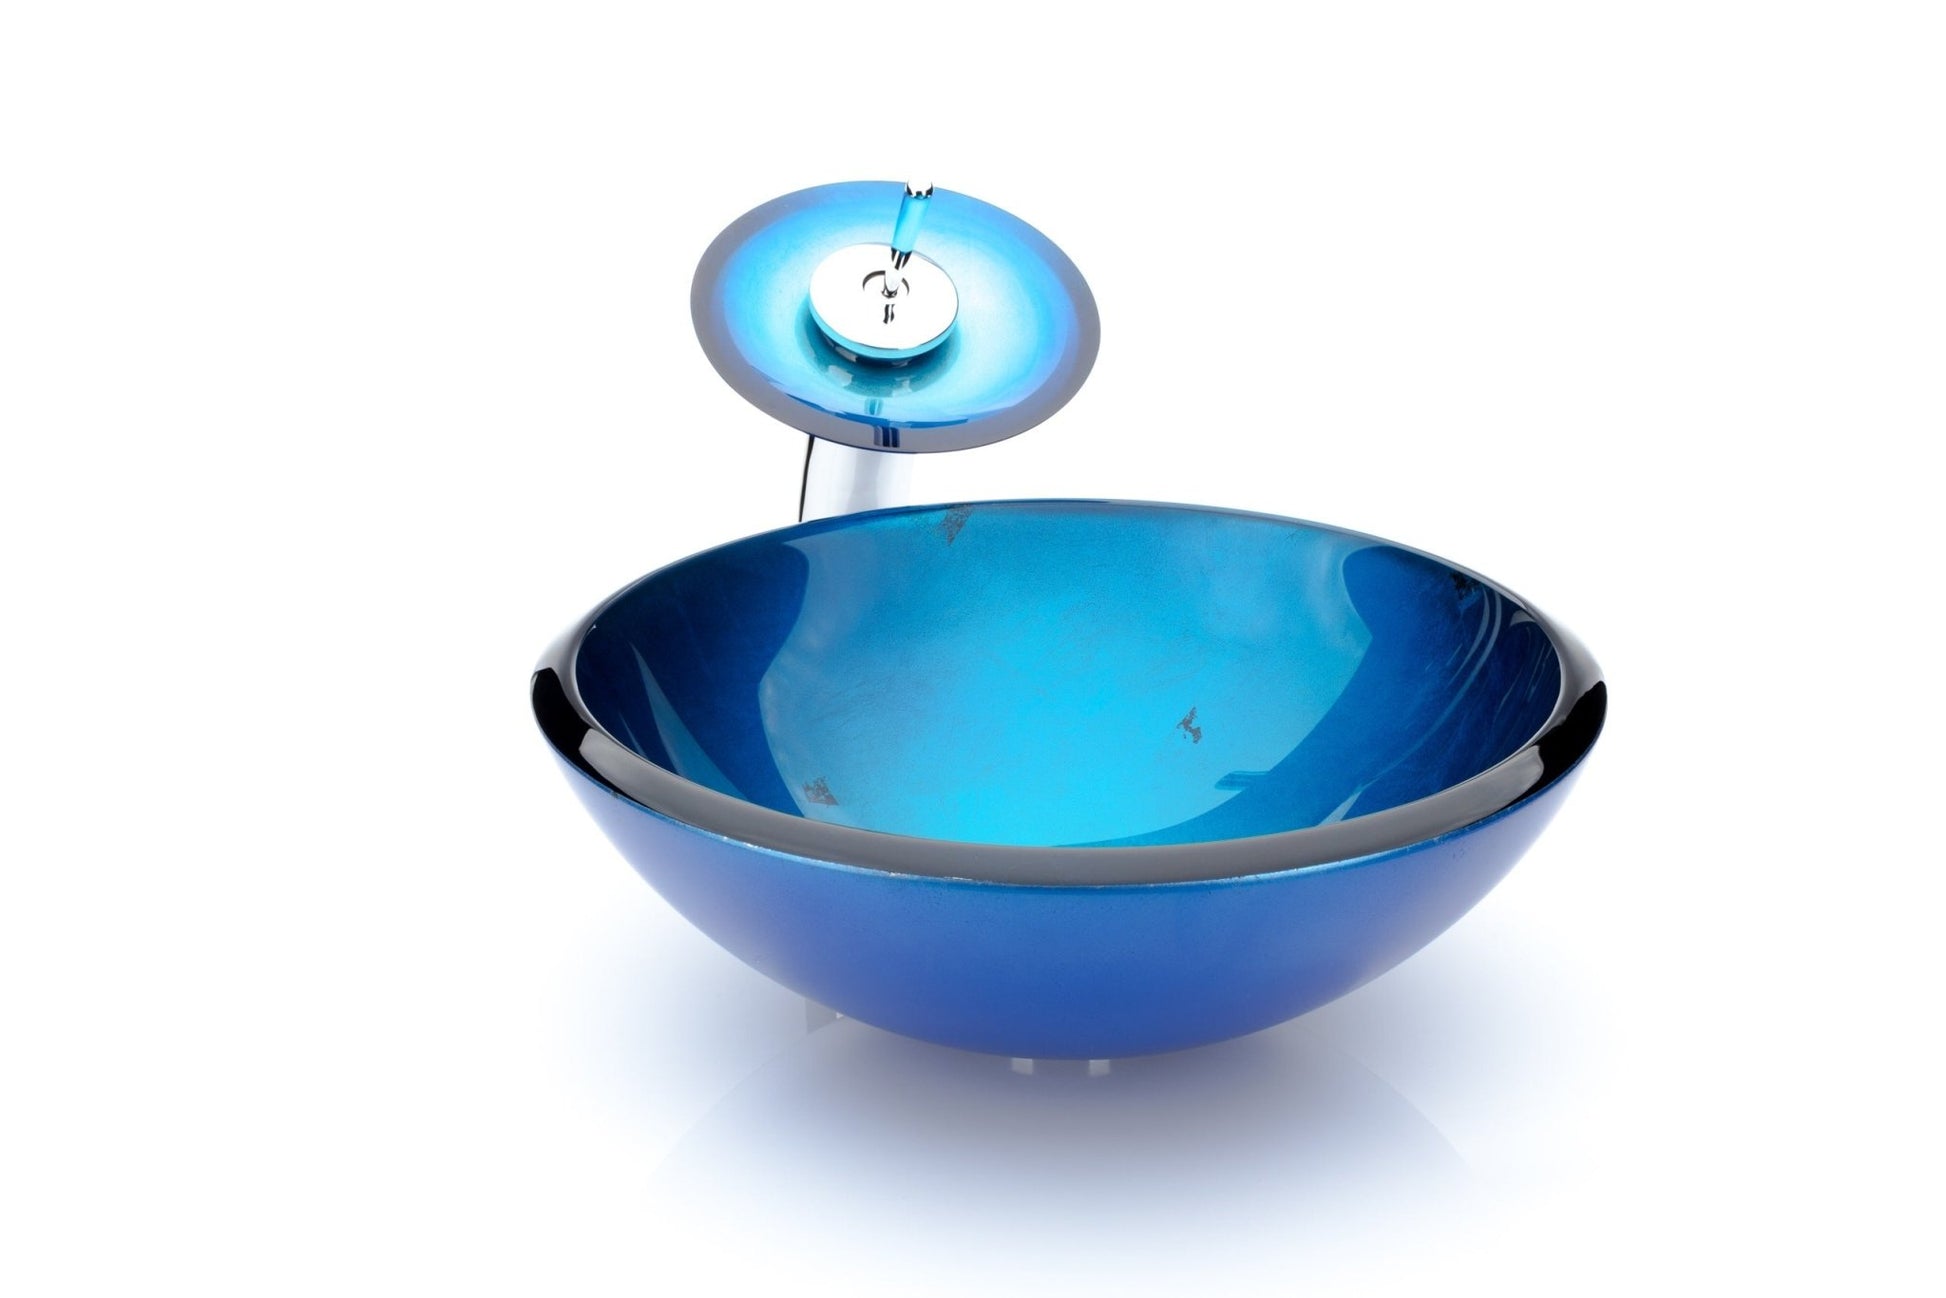 Blue Leaf Round Glass Vessel Sink Combo Waterfall Faucet Set - |VESIMI Design|